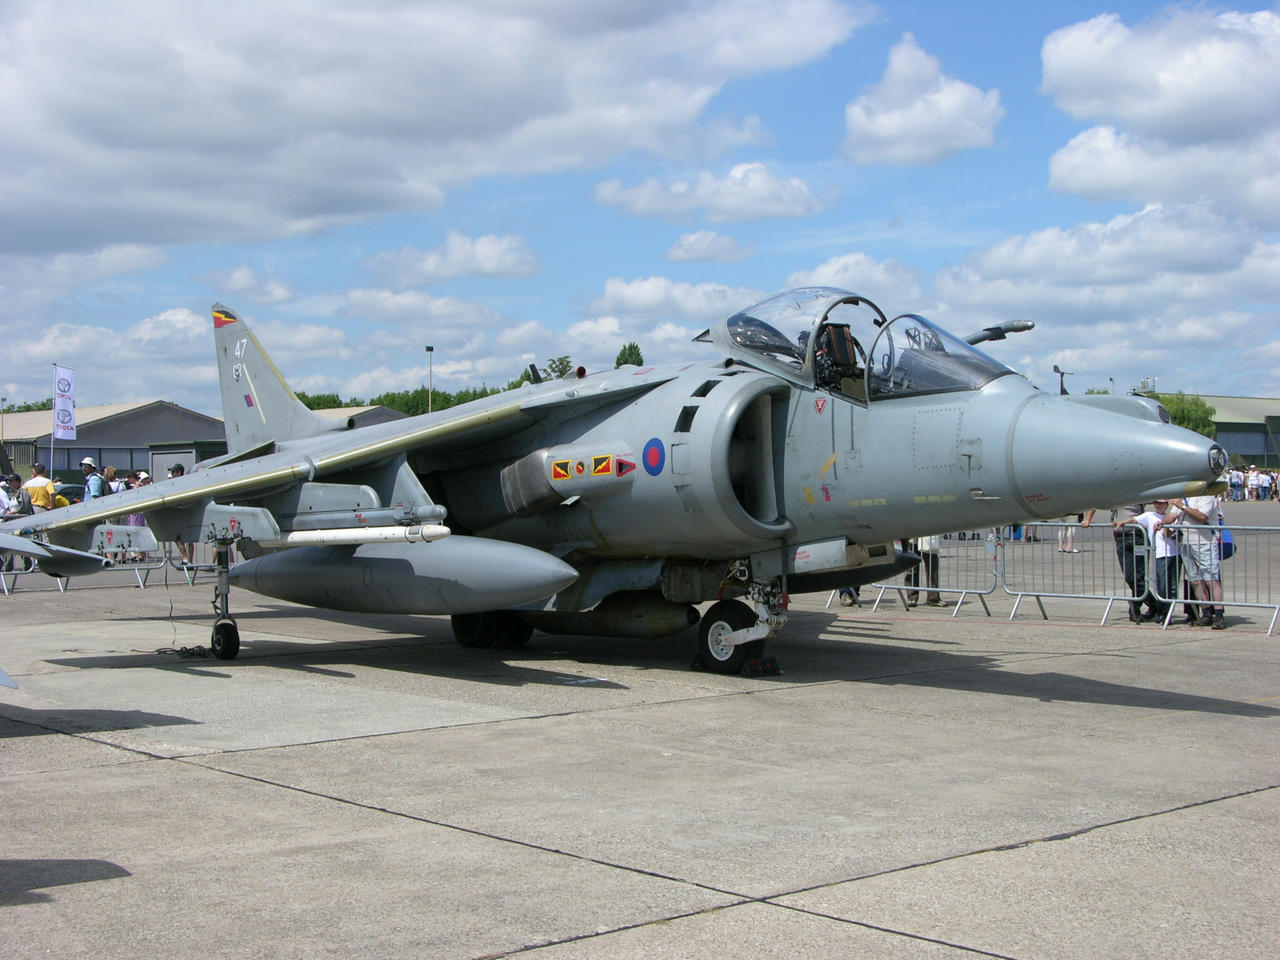 British Aerospace Harrier II - Wikipedia